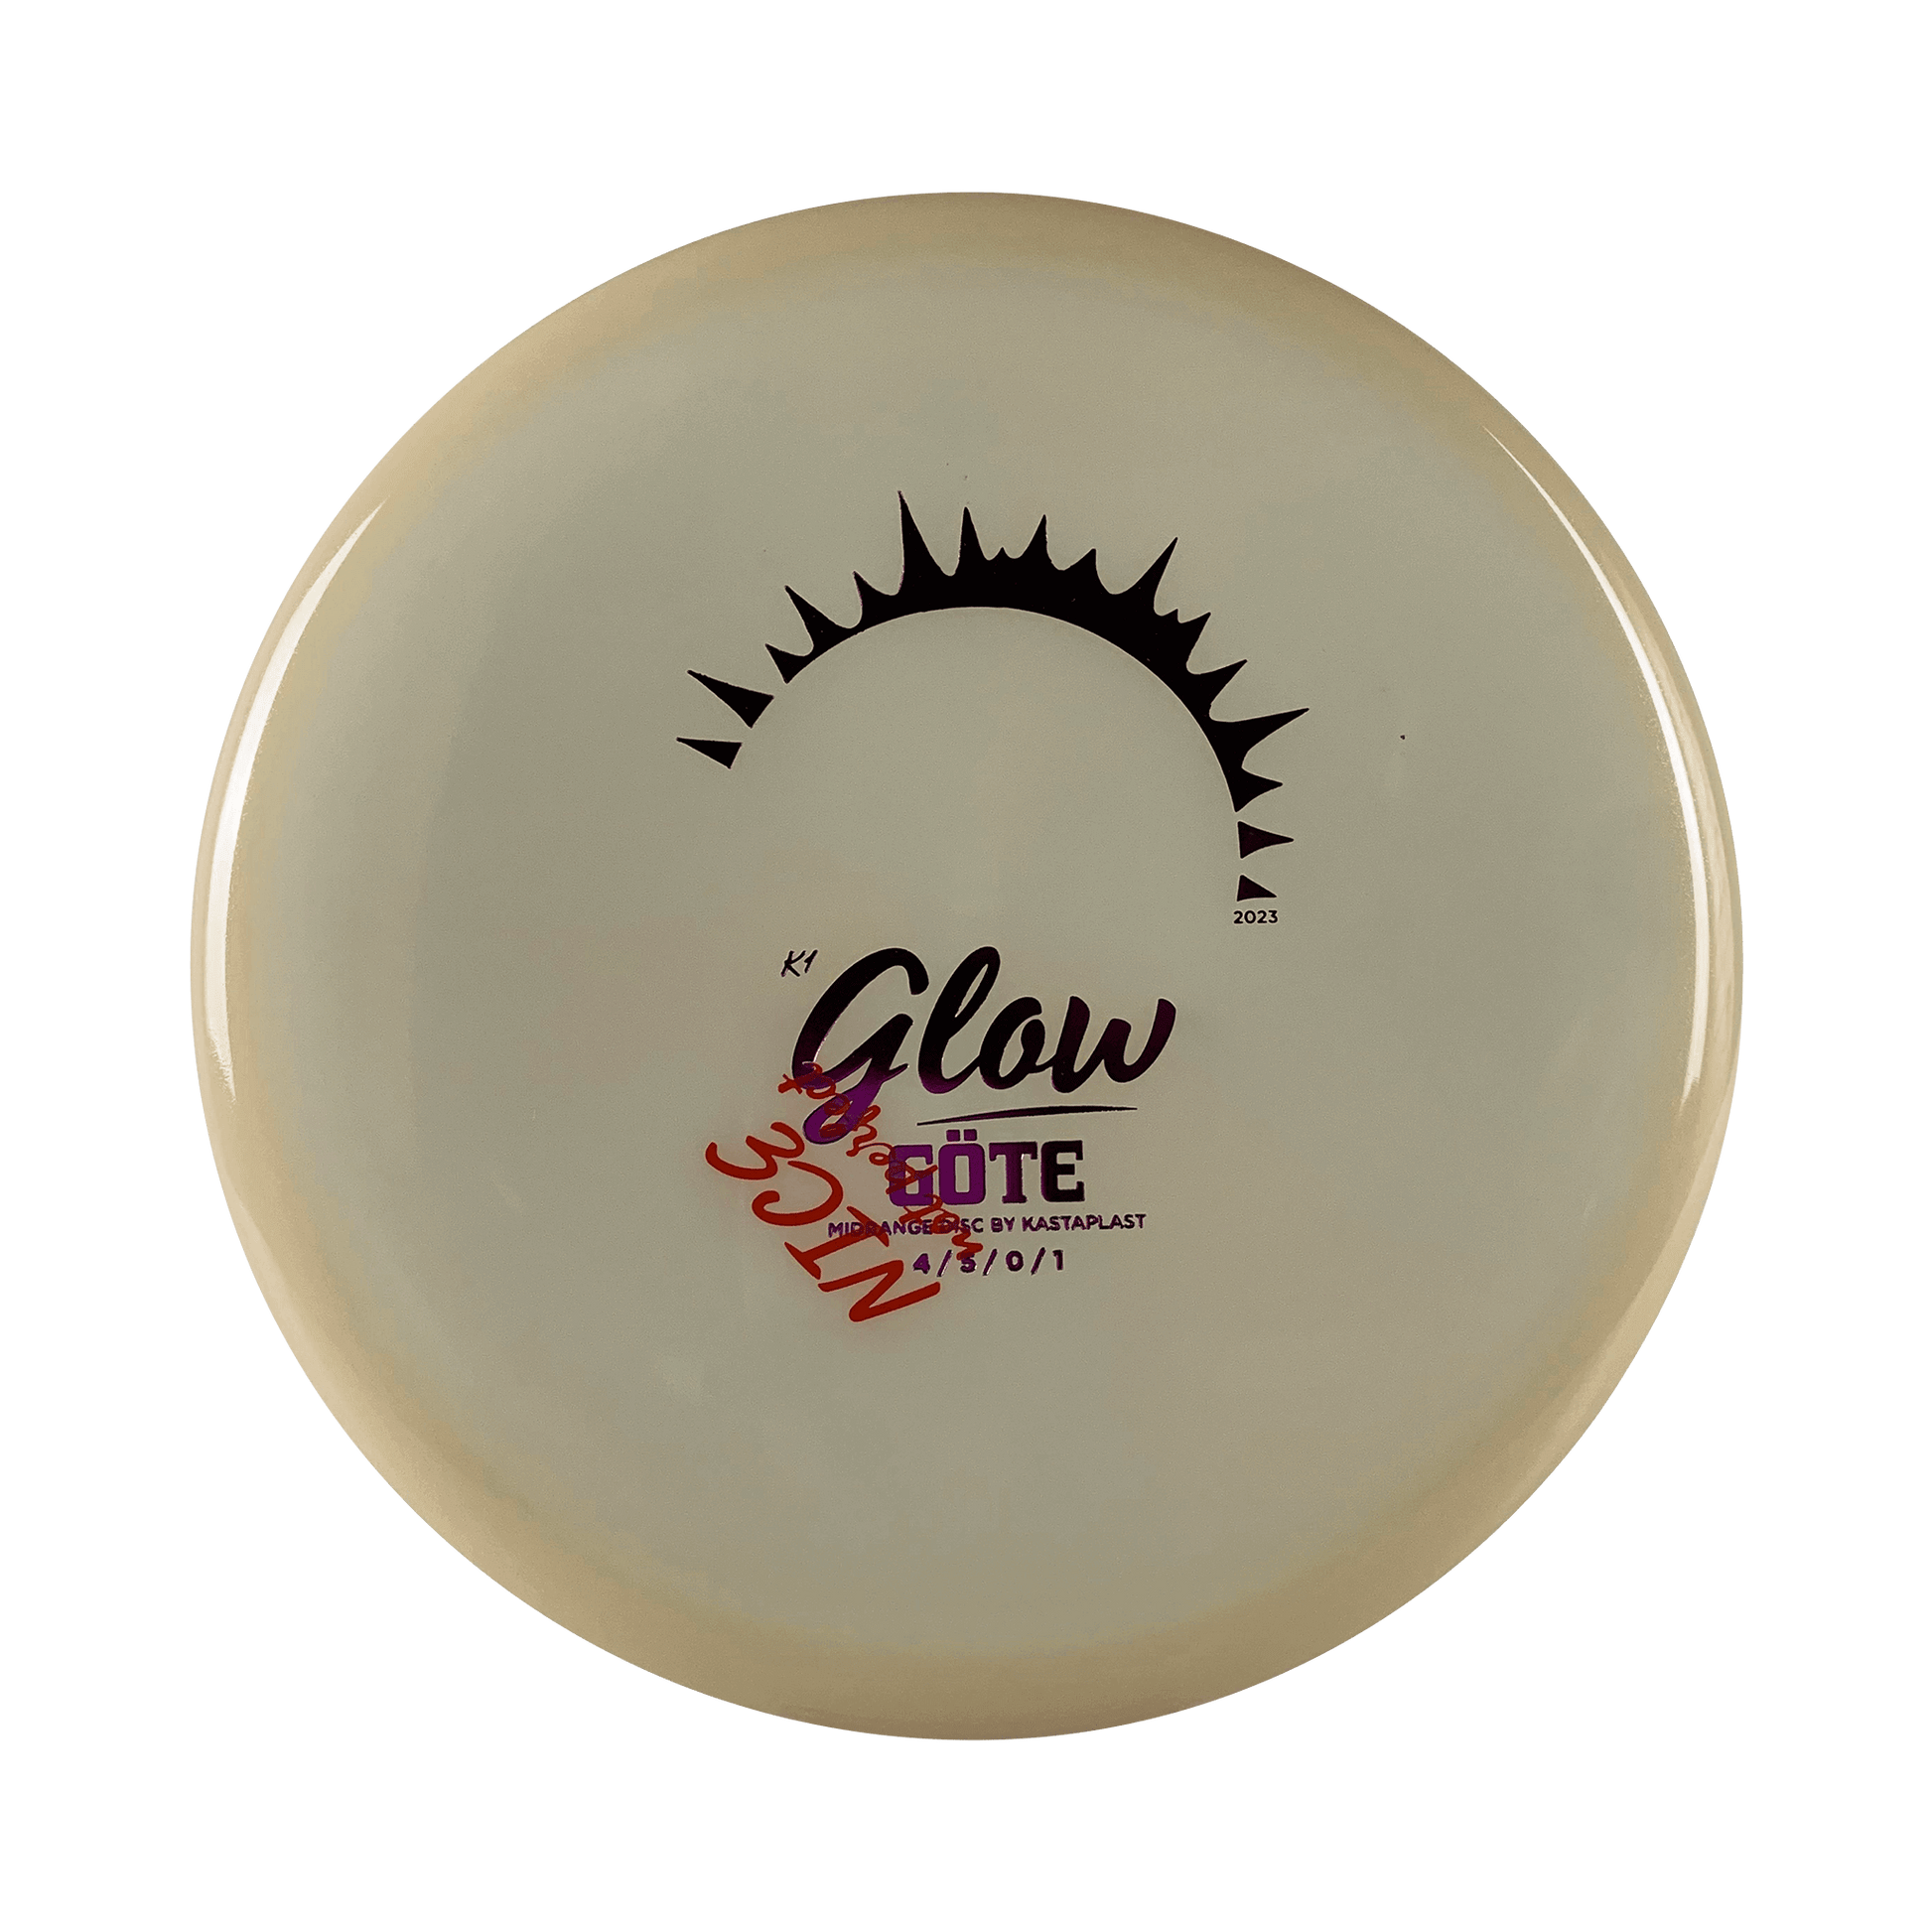 K1 Glow Gotë - NICE not perfect Disc Kastaplast clear white 176 